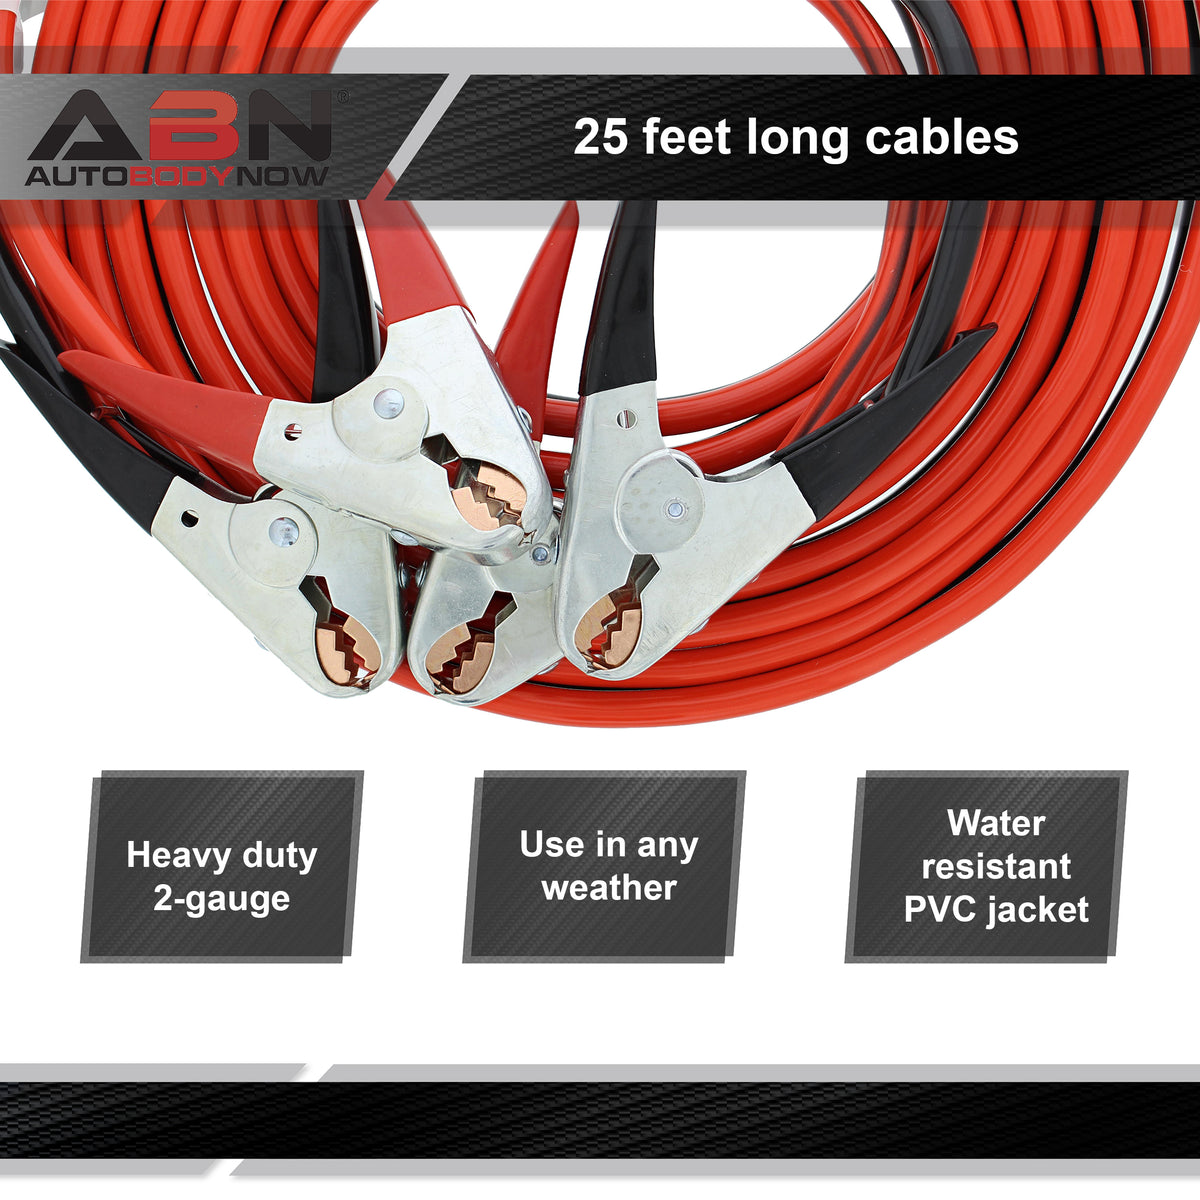 Automotive Jumper Cables 25’ Feet 2-Gauge 600 AMP Car Booster Cables